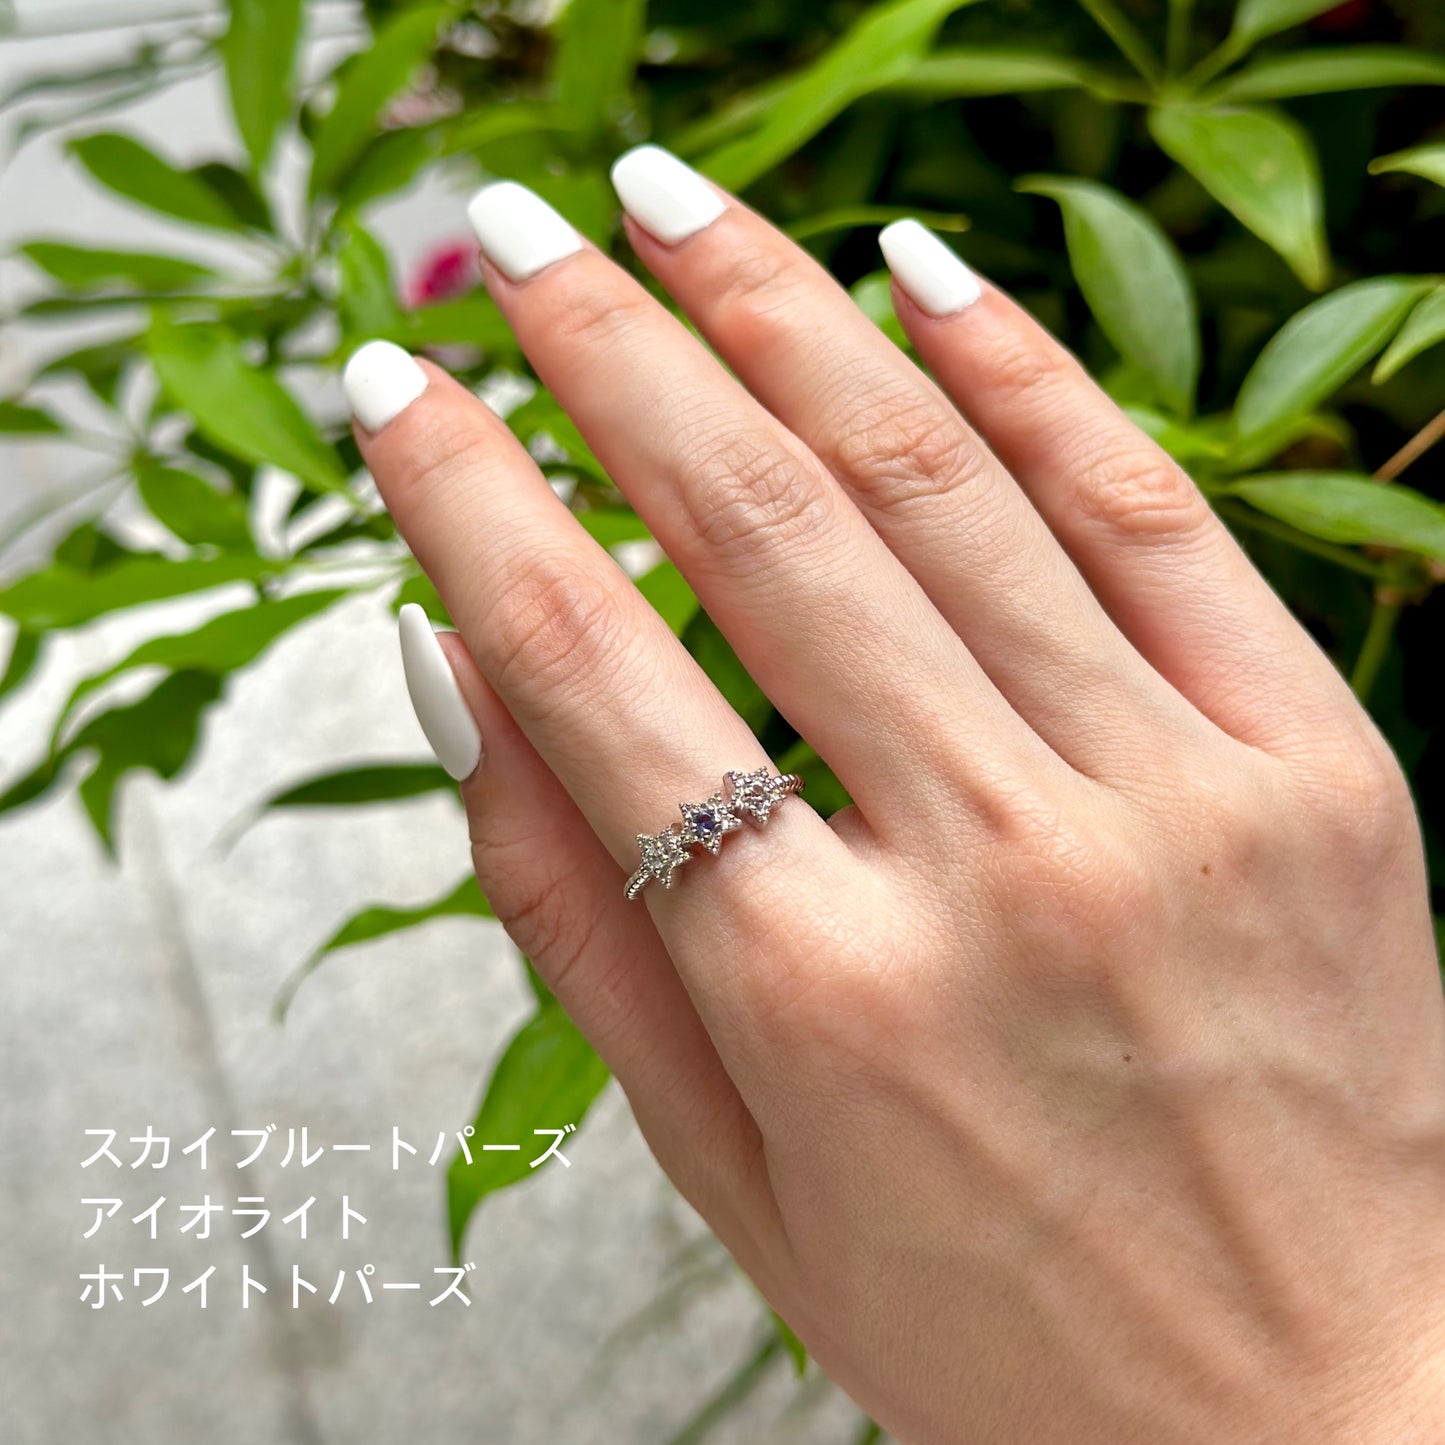 【poco】Star design ring